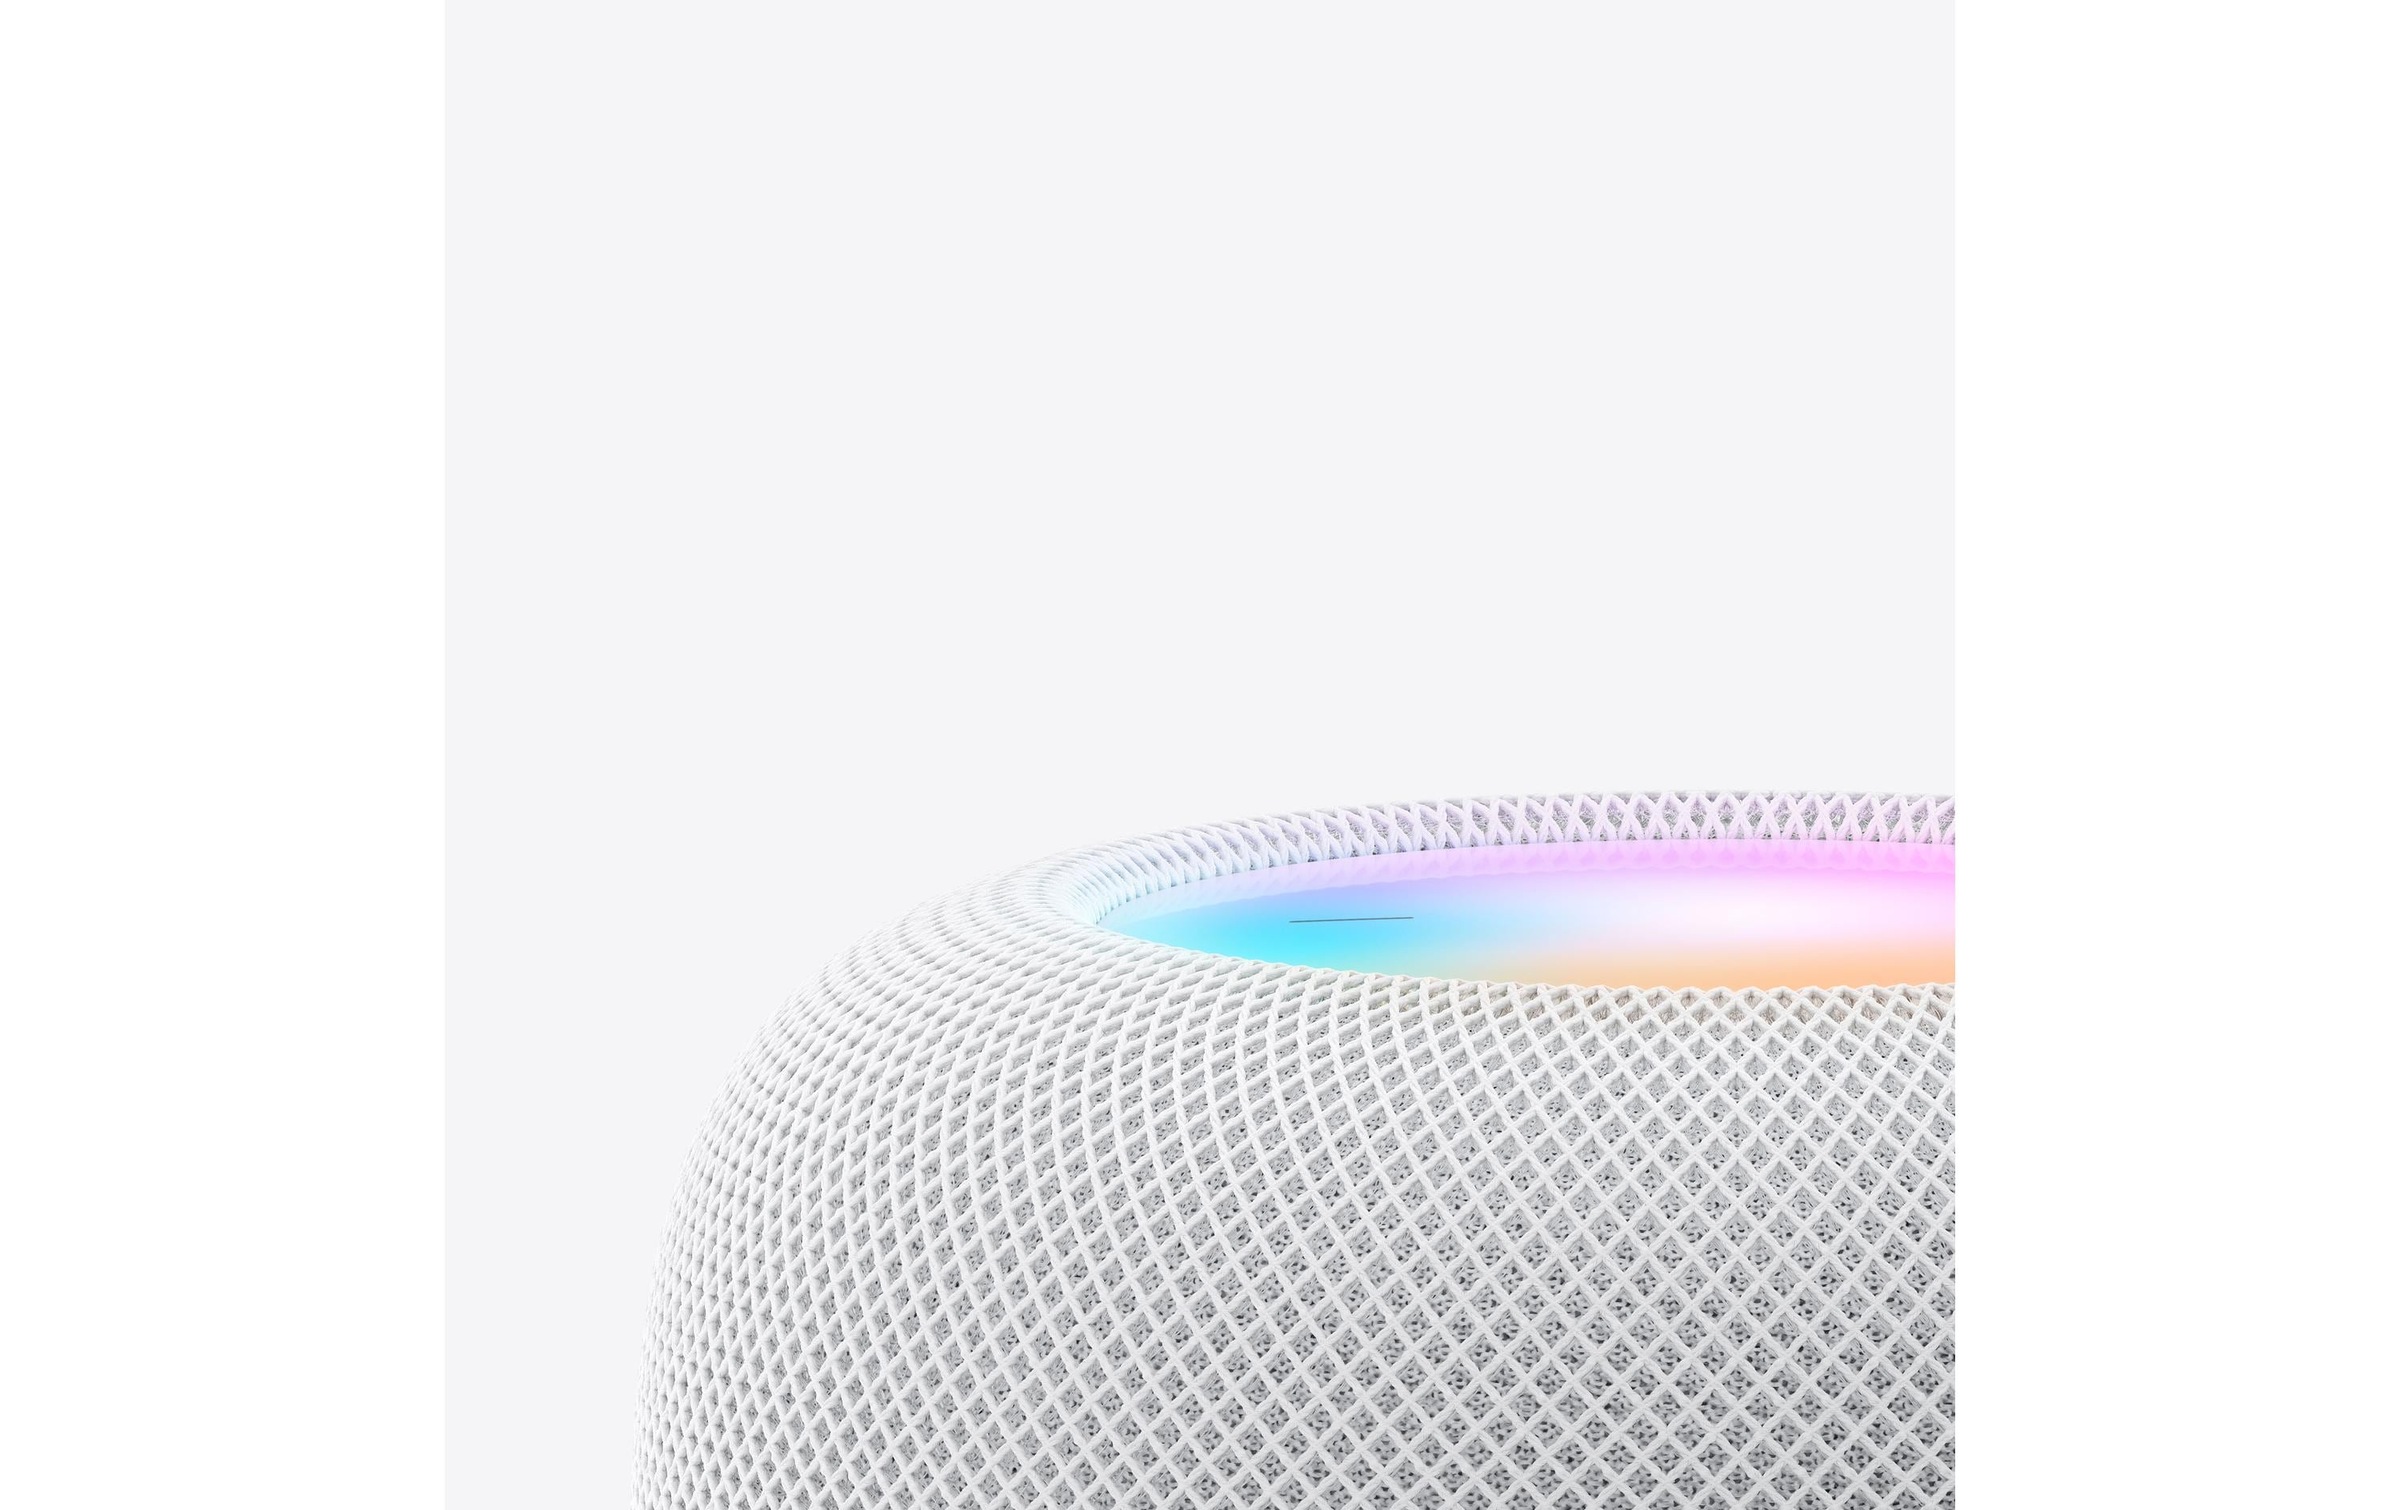 Apple Lautsprecher »Apple HomePod«